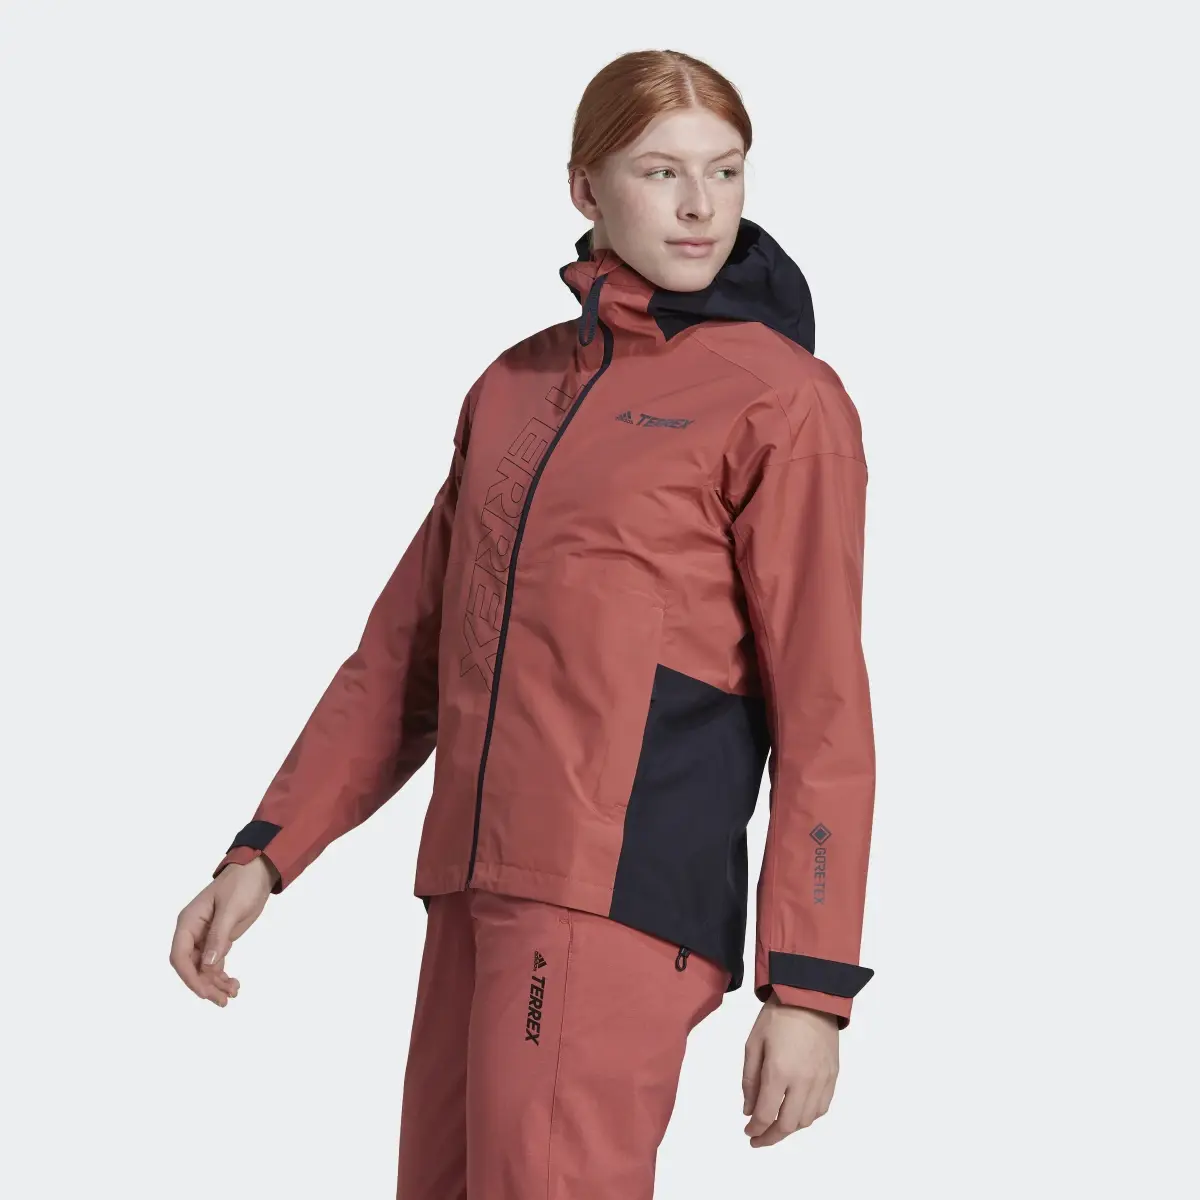 Adidas Terrex GORE-TEX Paclite Rain Jacket. 3